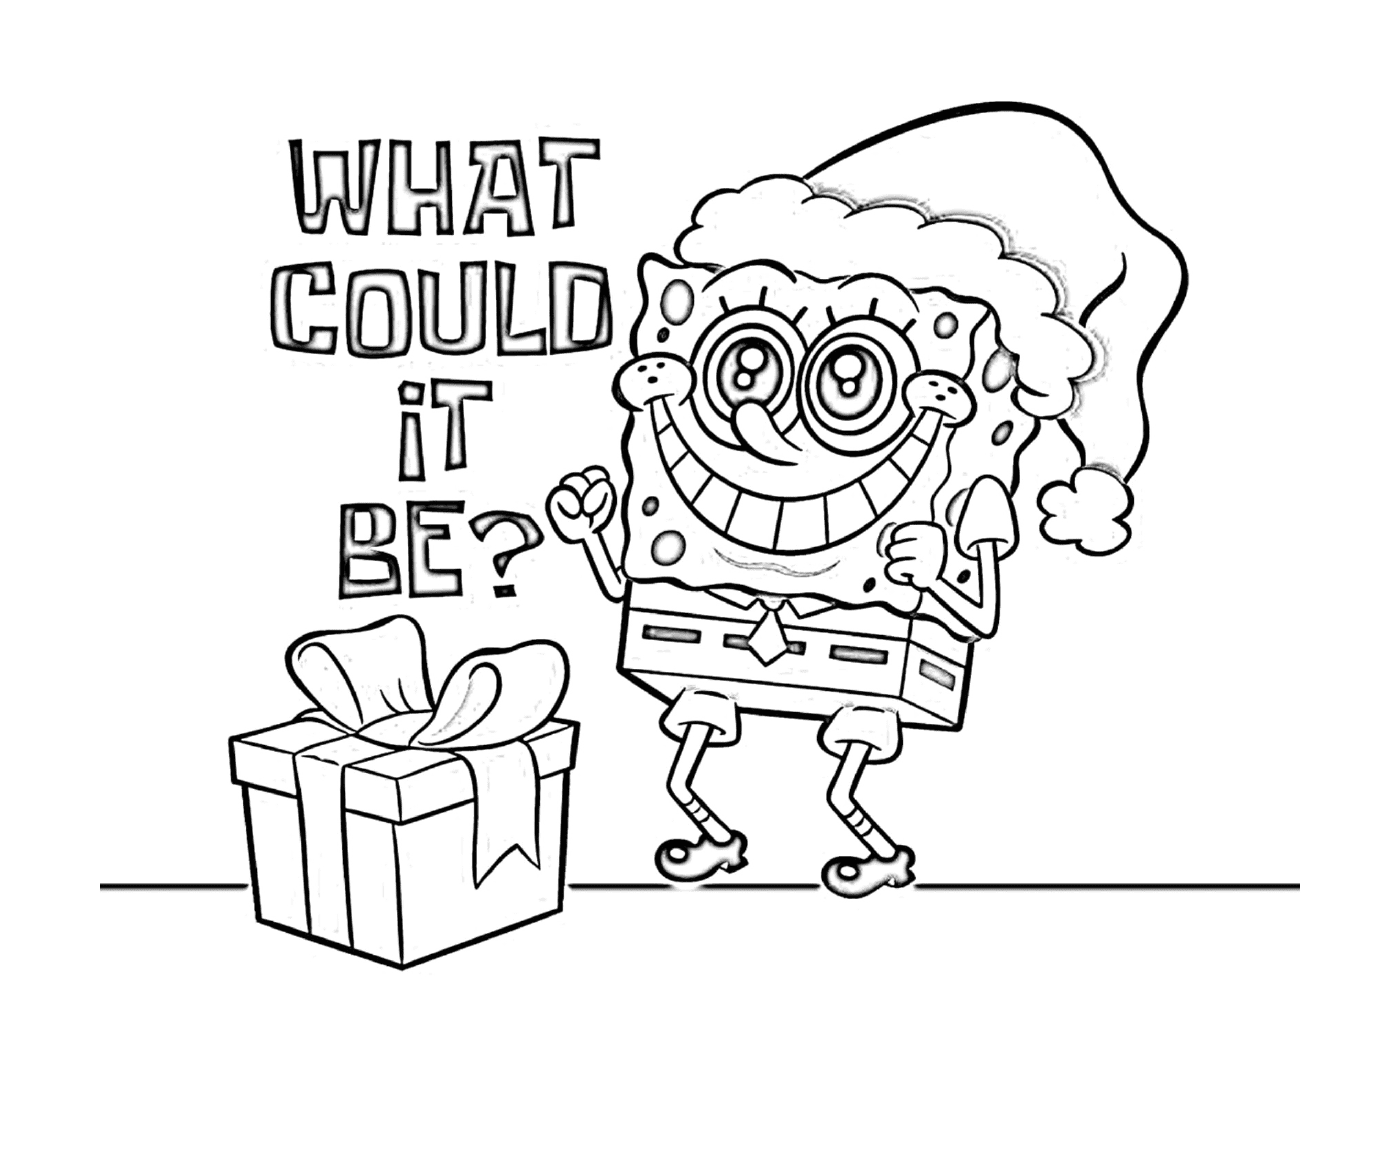  Bob the Christmas sponge with a Santa's hat 